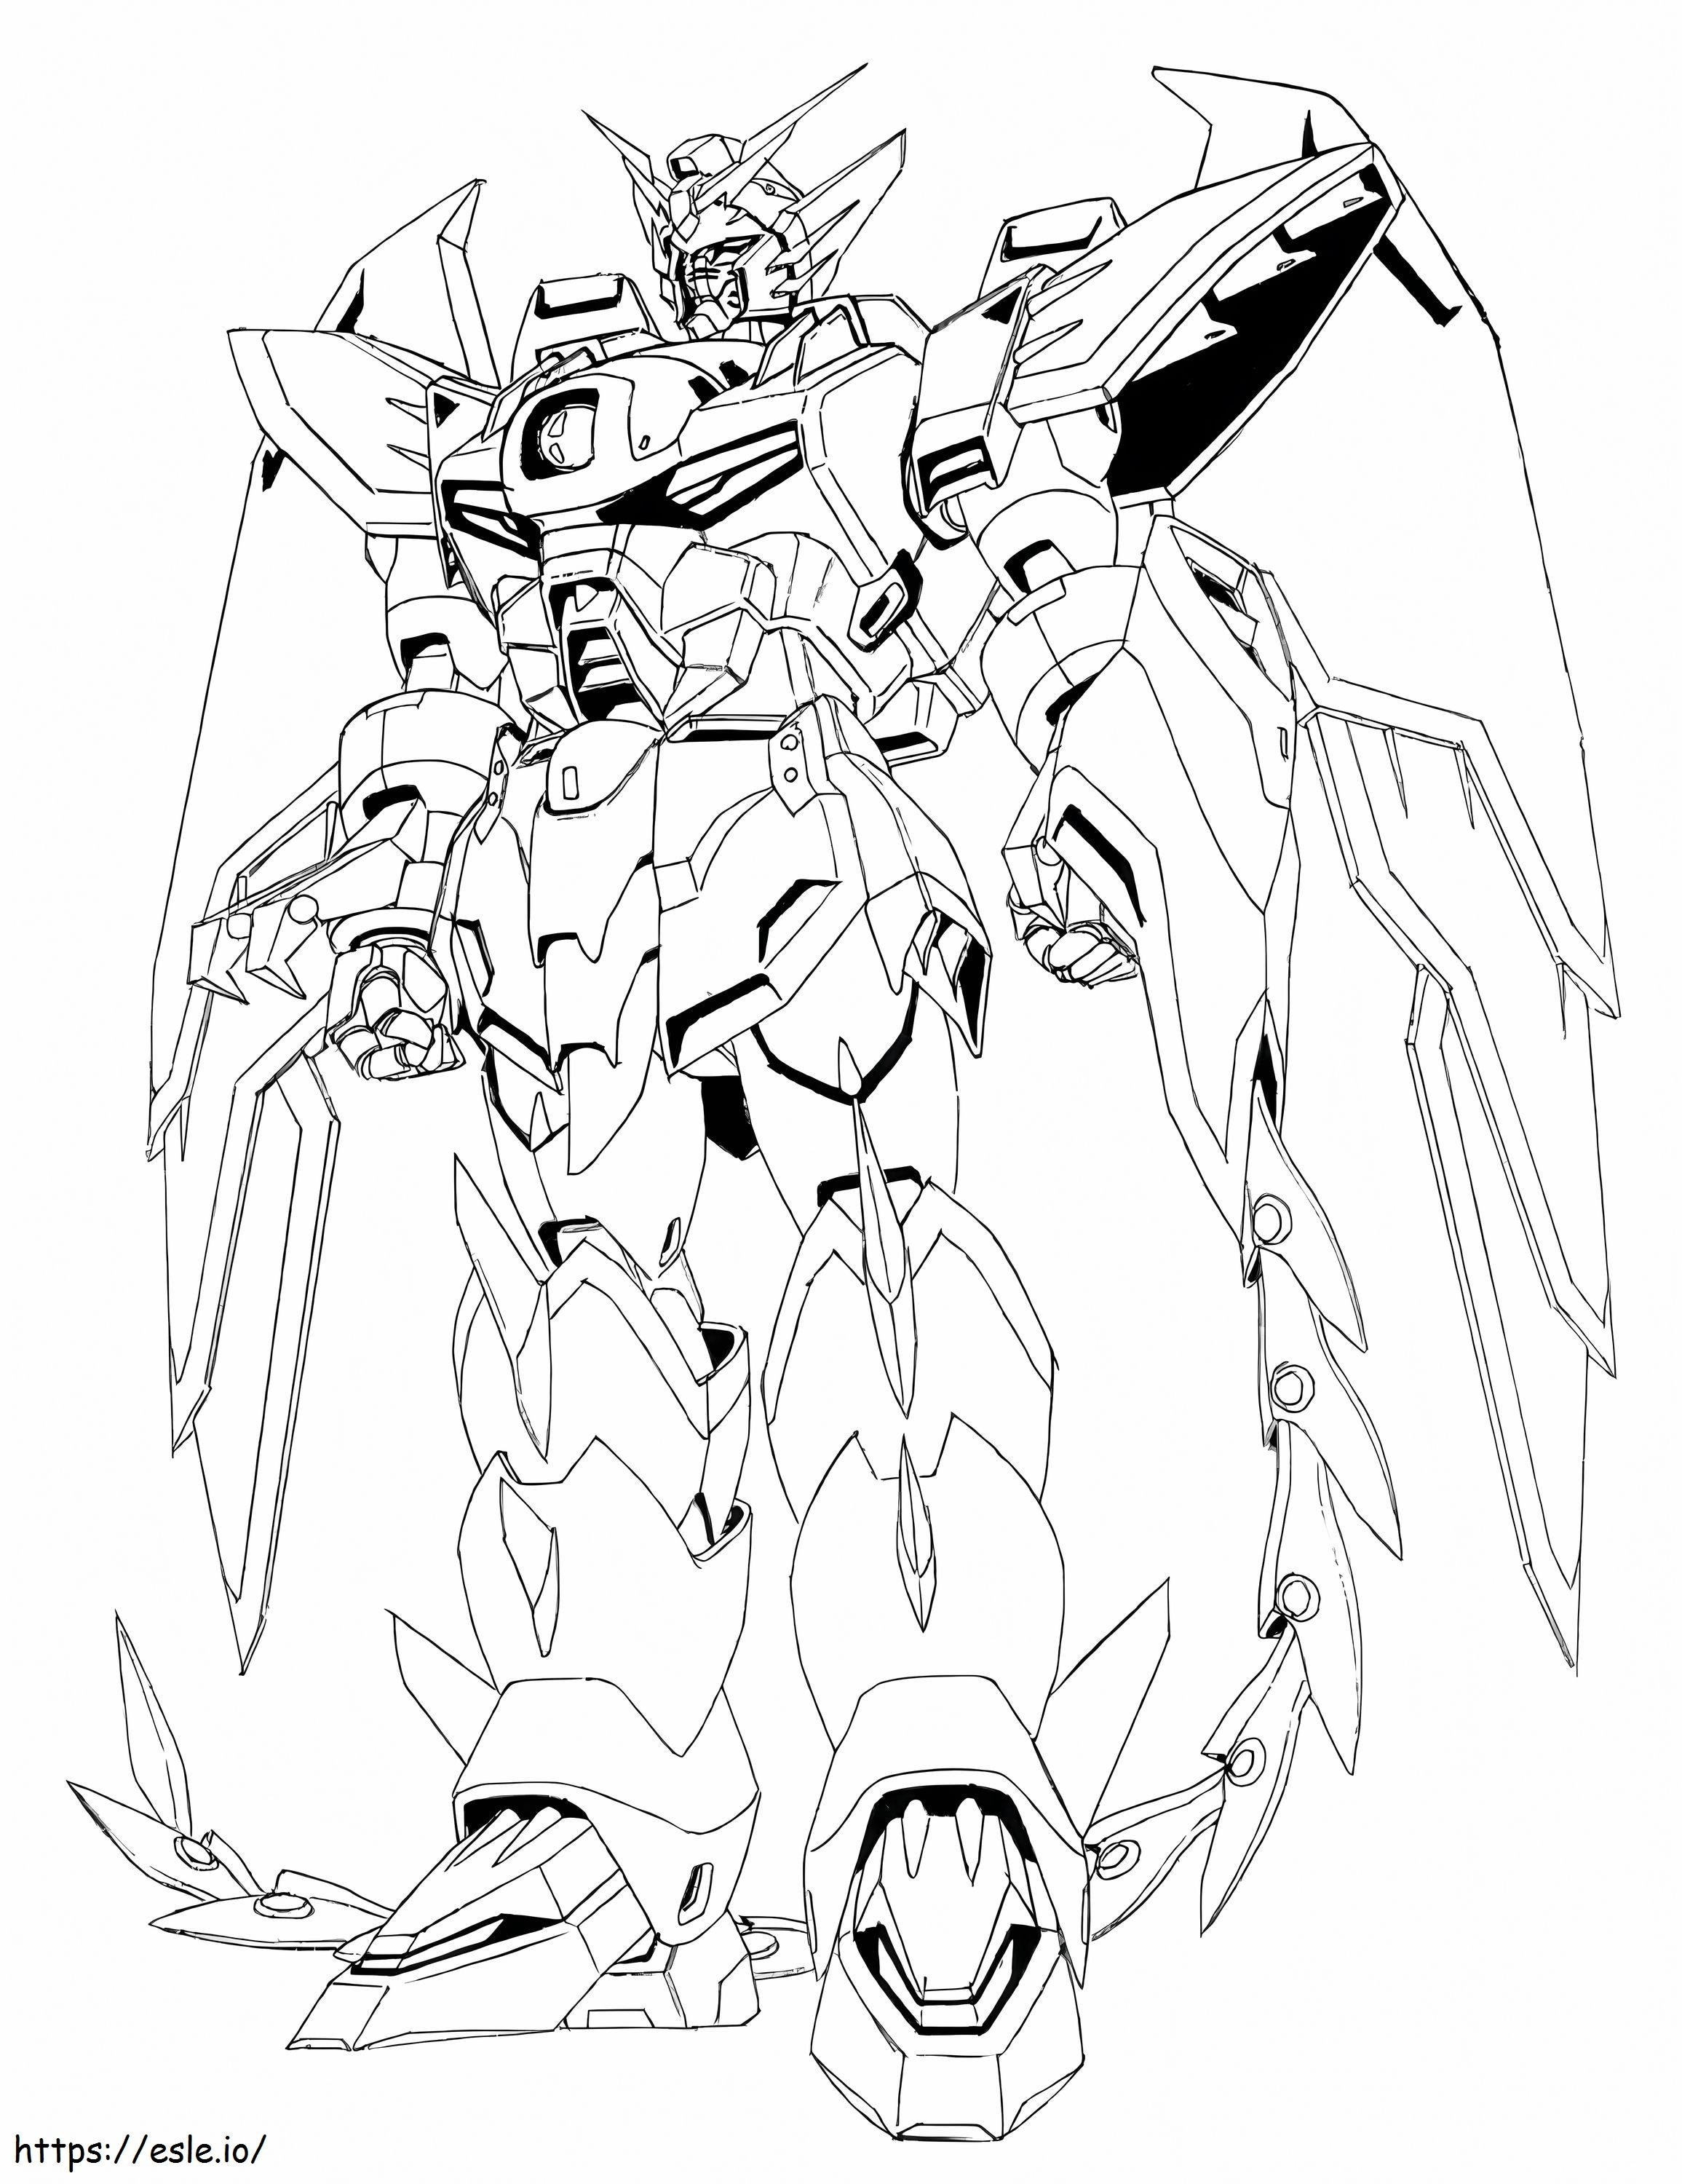 İnanılmaz Gundam boyama